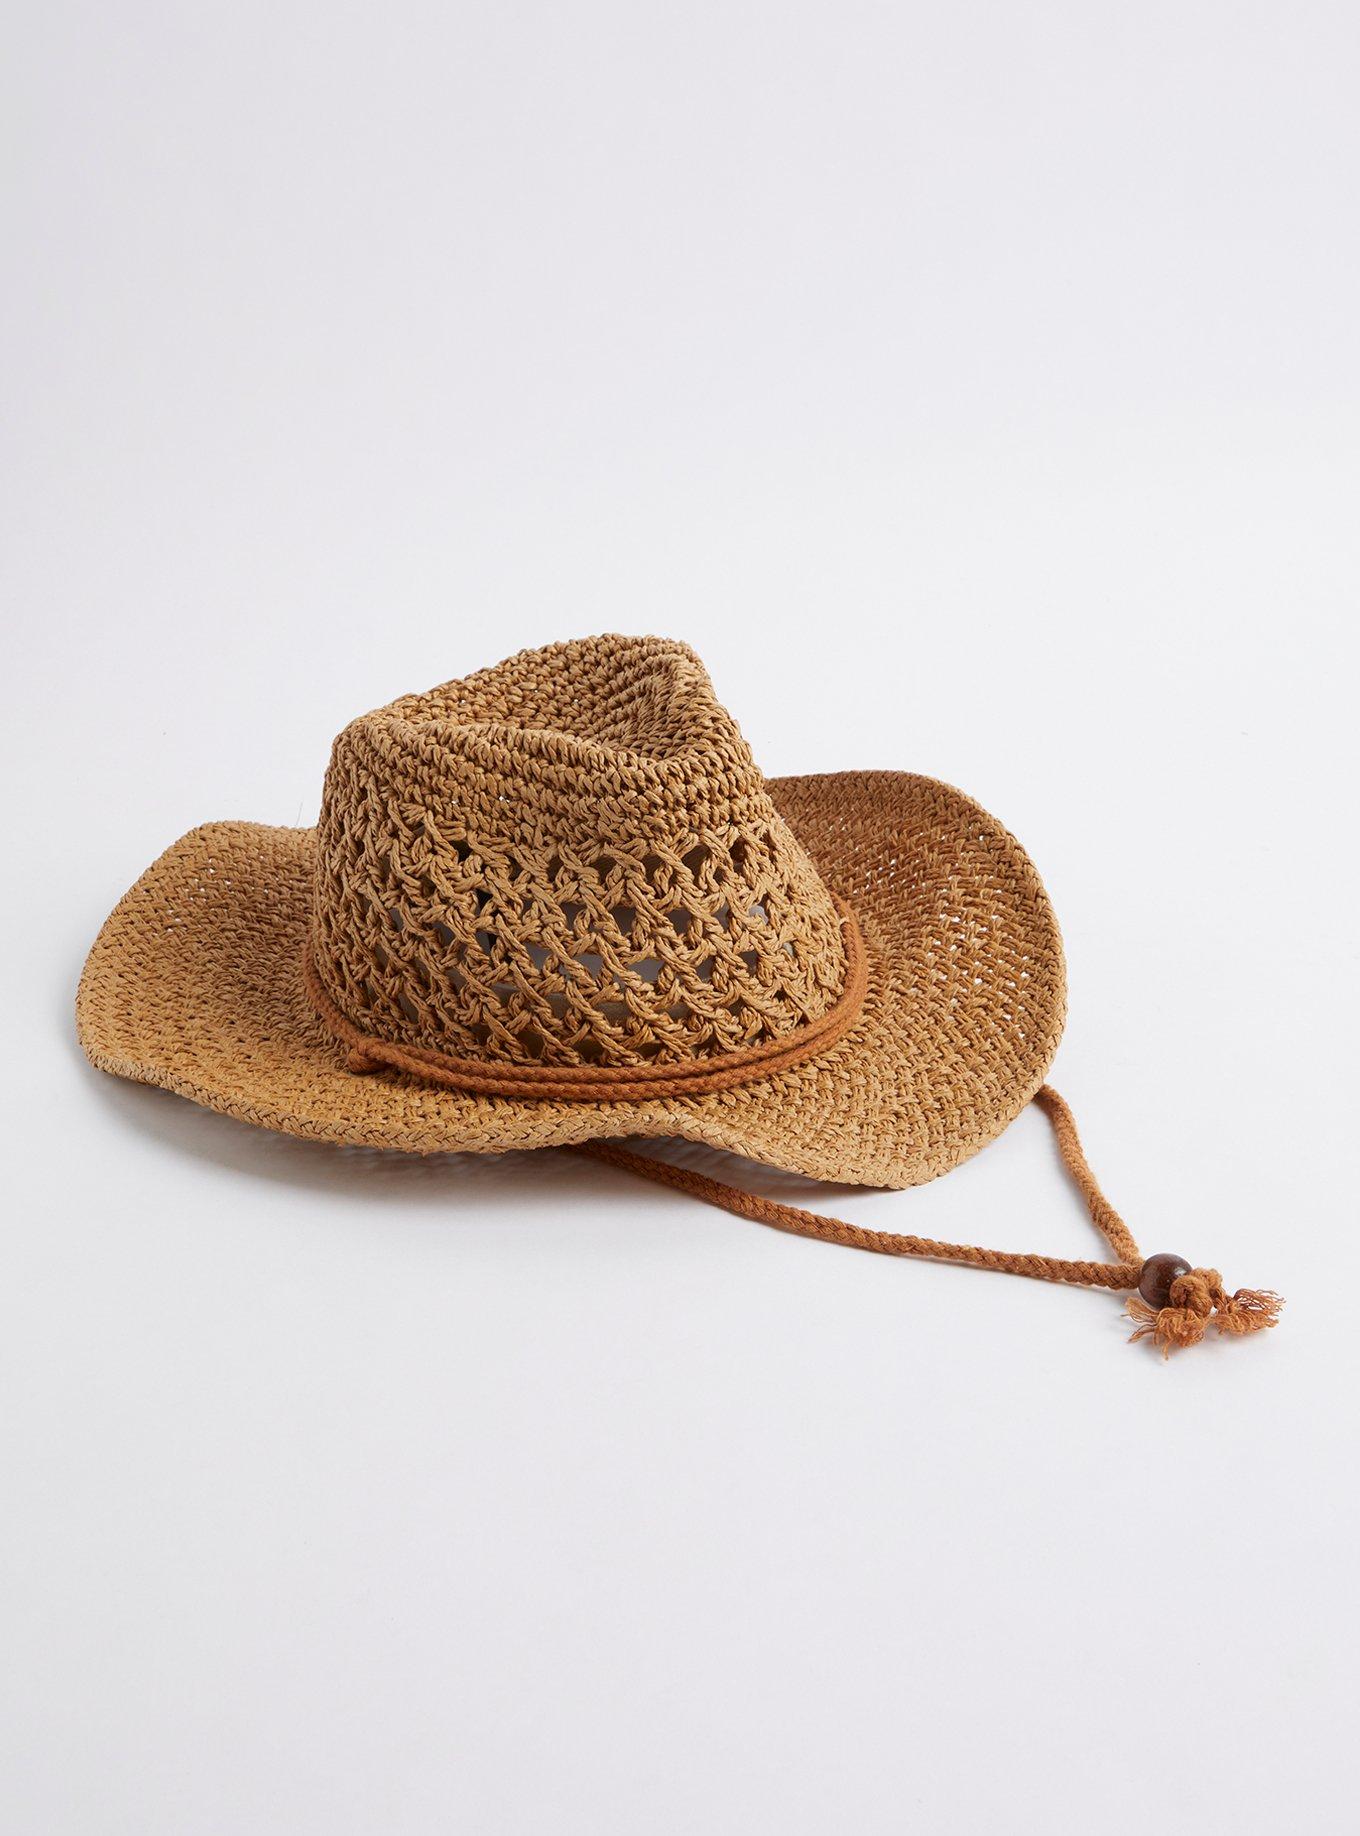 Plus Size - Straw Cowboy Hat - Brown - Torrid